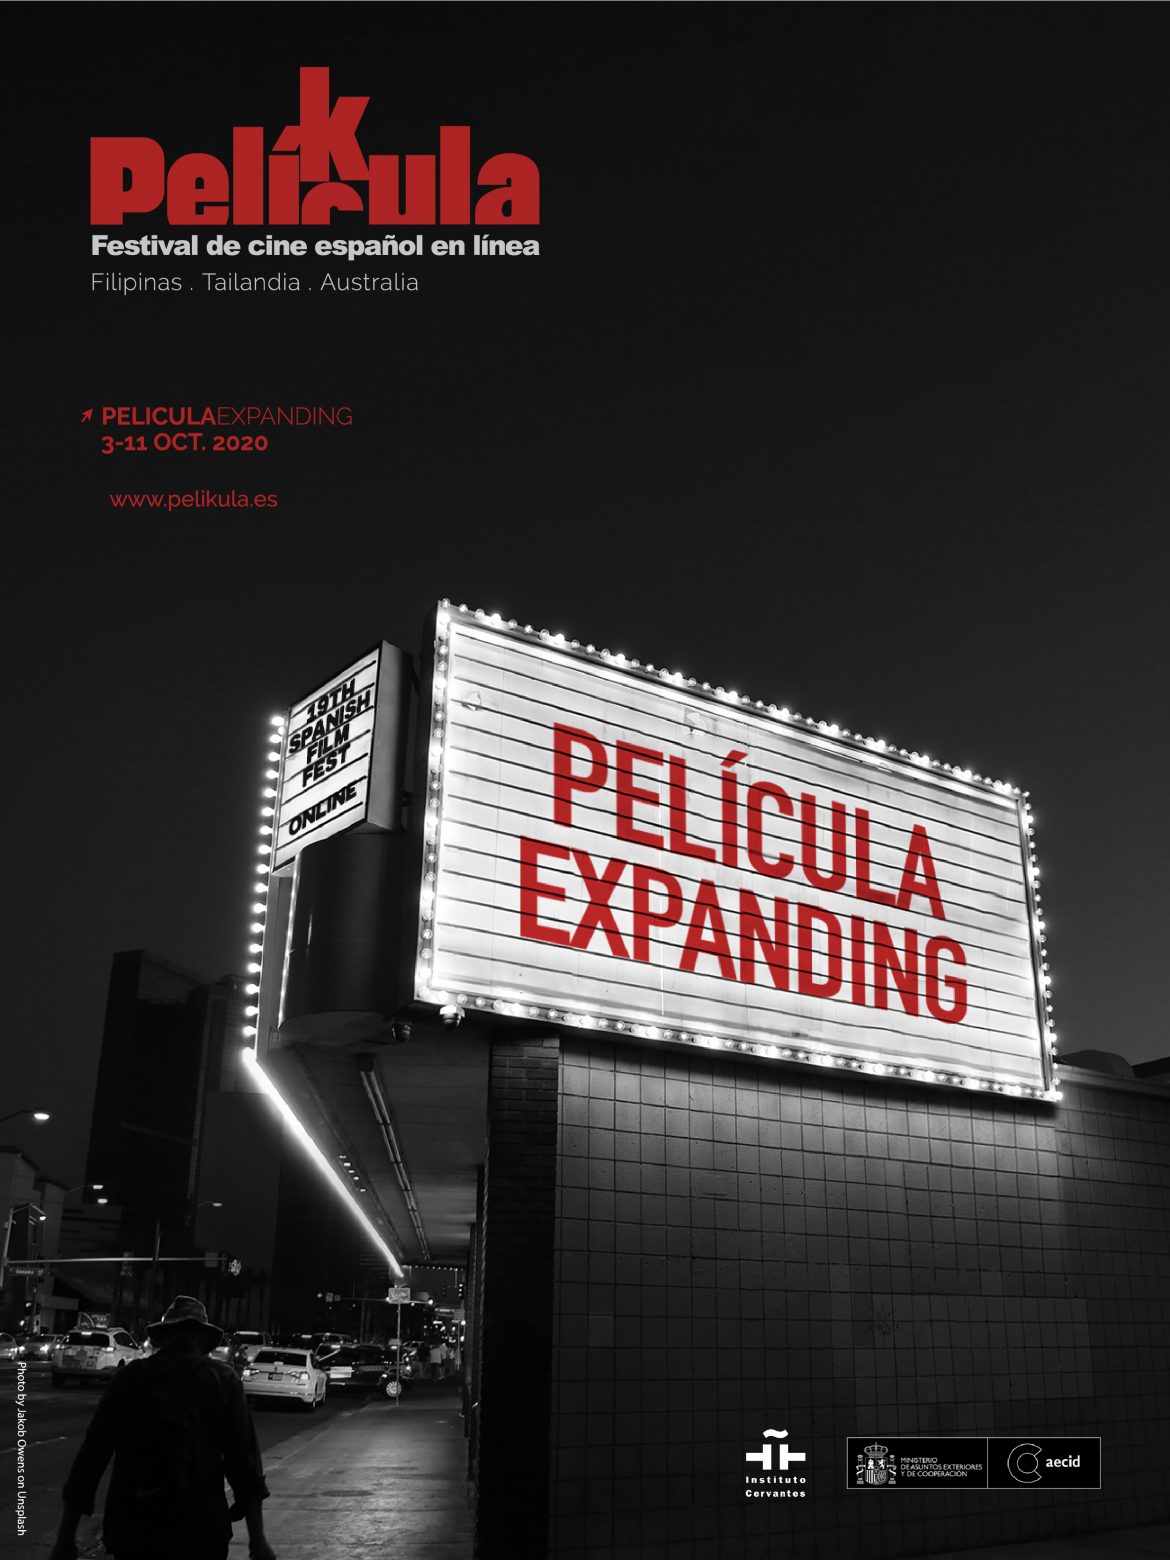 PELÍCULA EXPANDING – Spanish Film Festival 2020 goes online